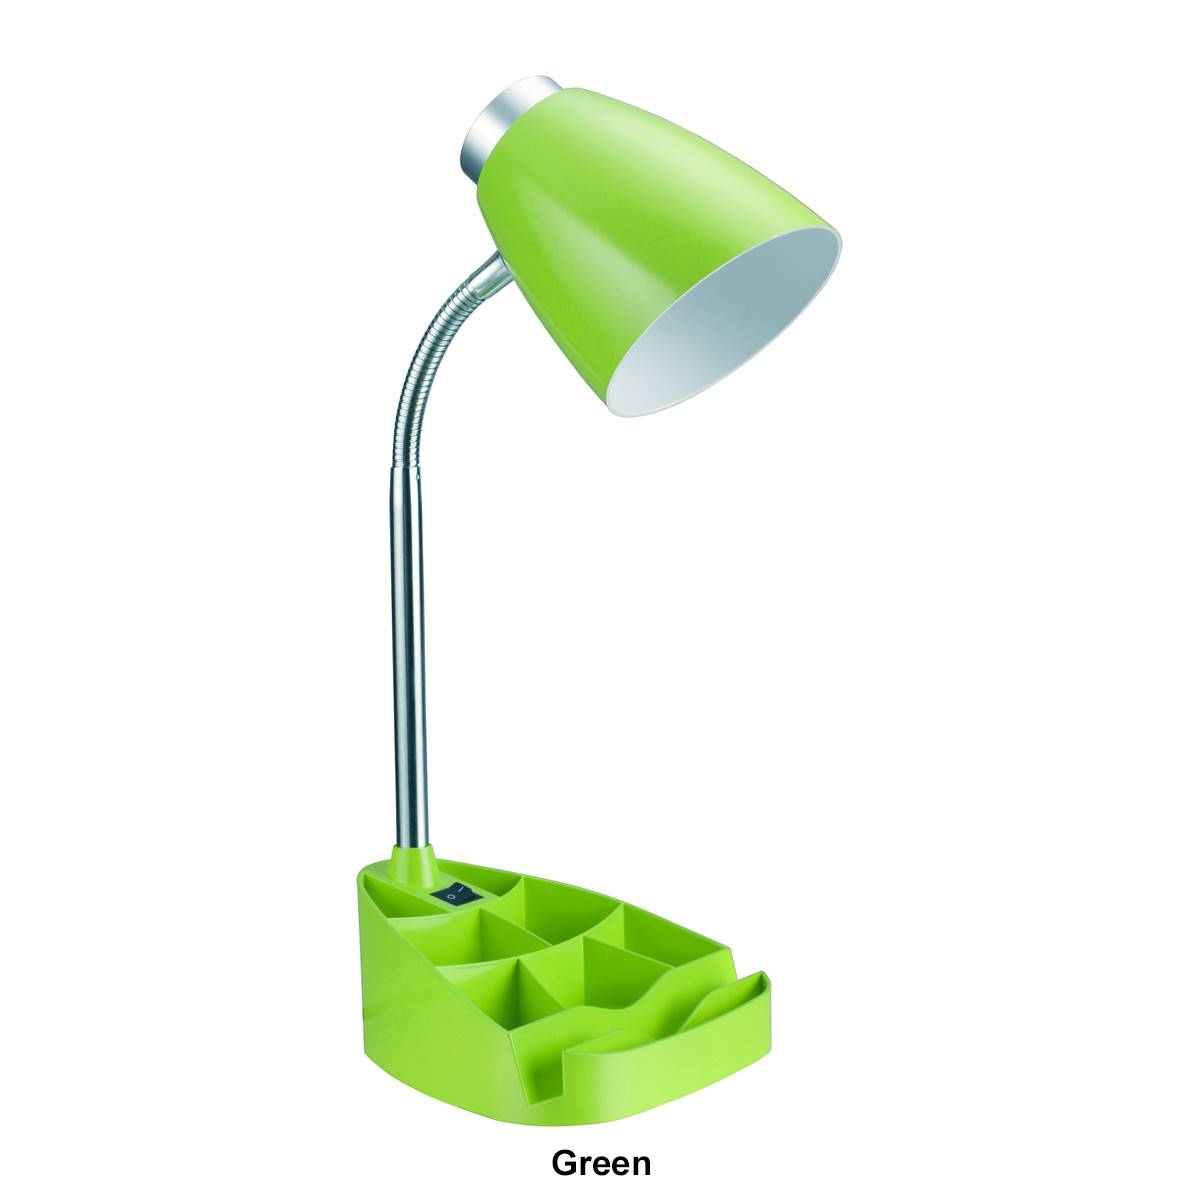 LimeLights Gooseneck Organizer IPad Tablet Stand Desk Lamp